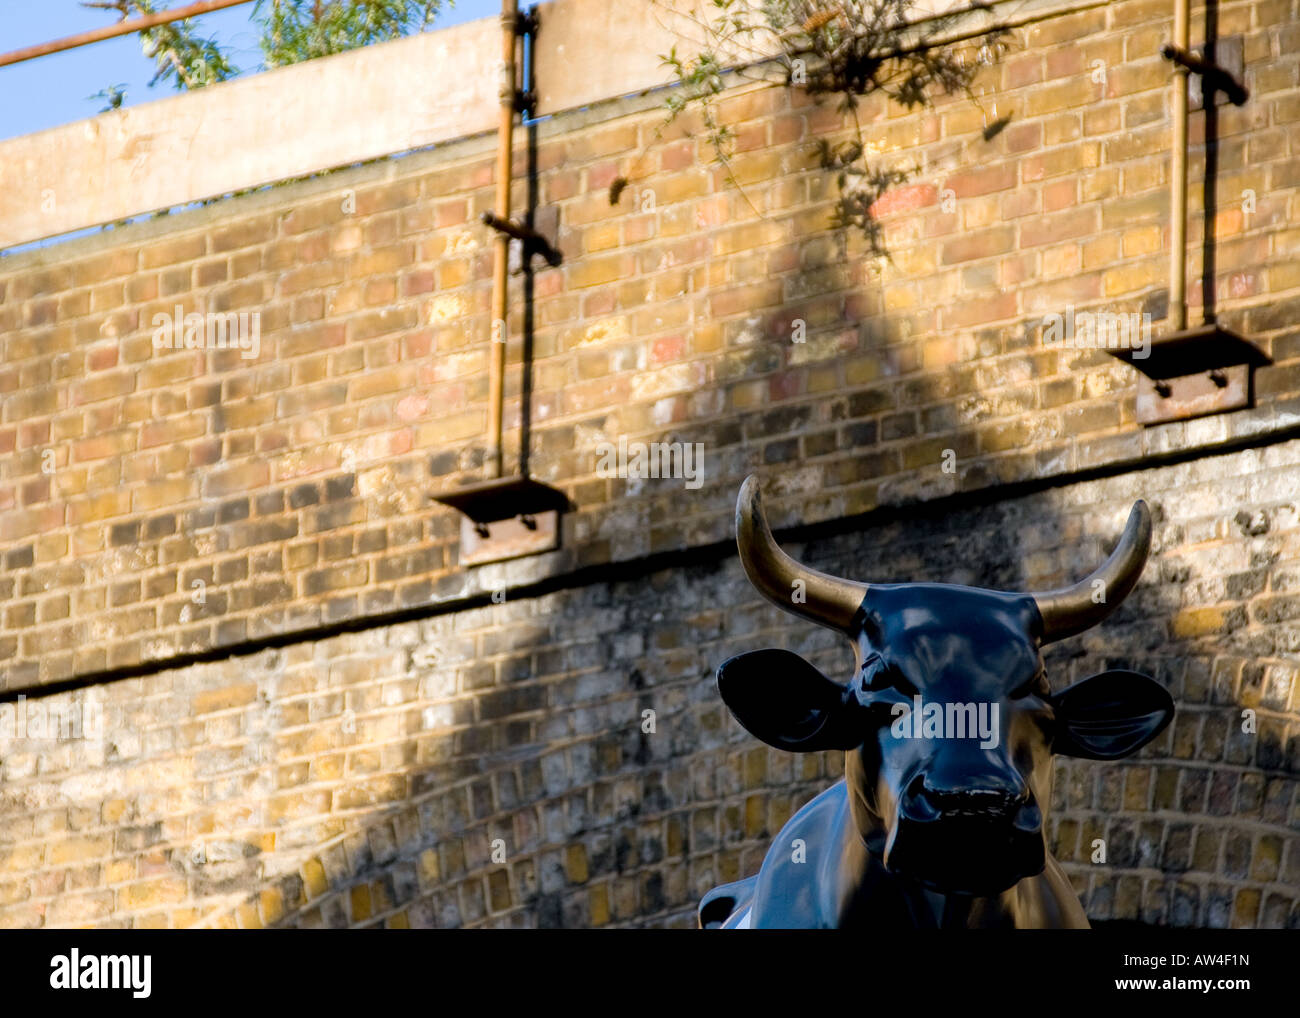 black and gold statue of bull underneath london railway bridge Stock Photo